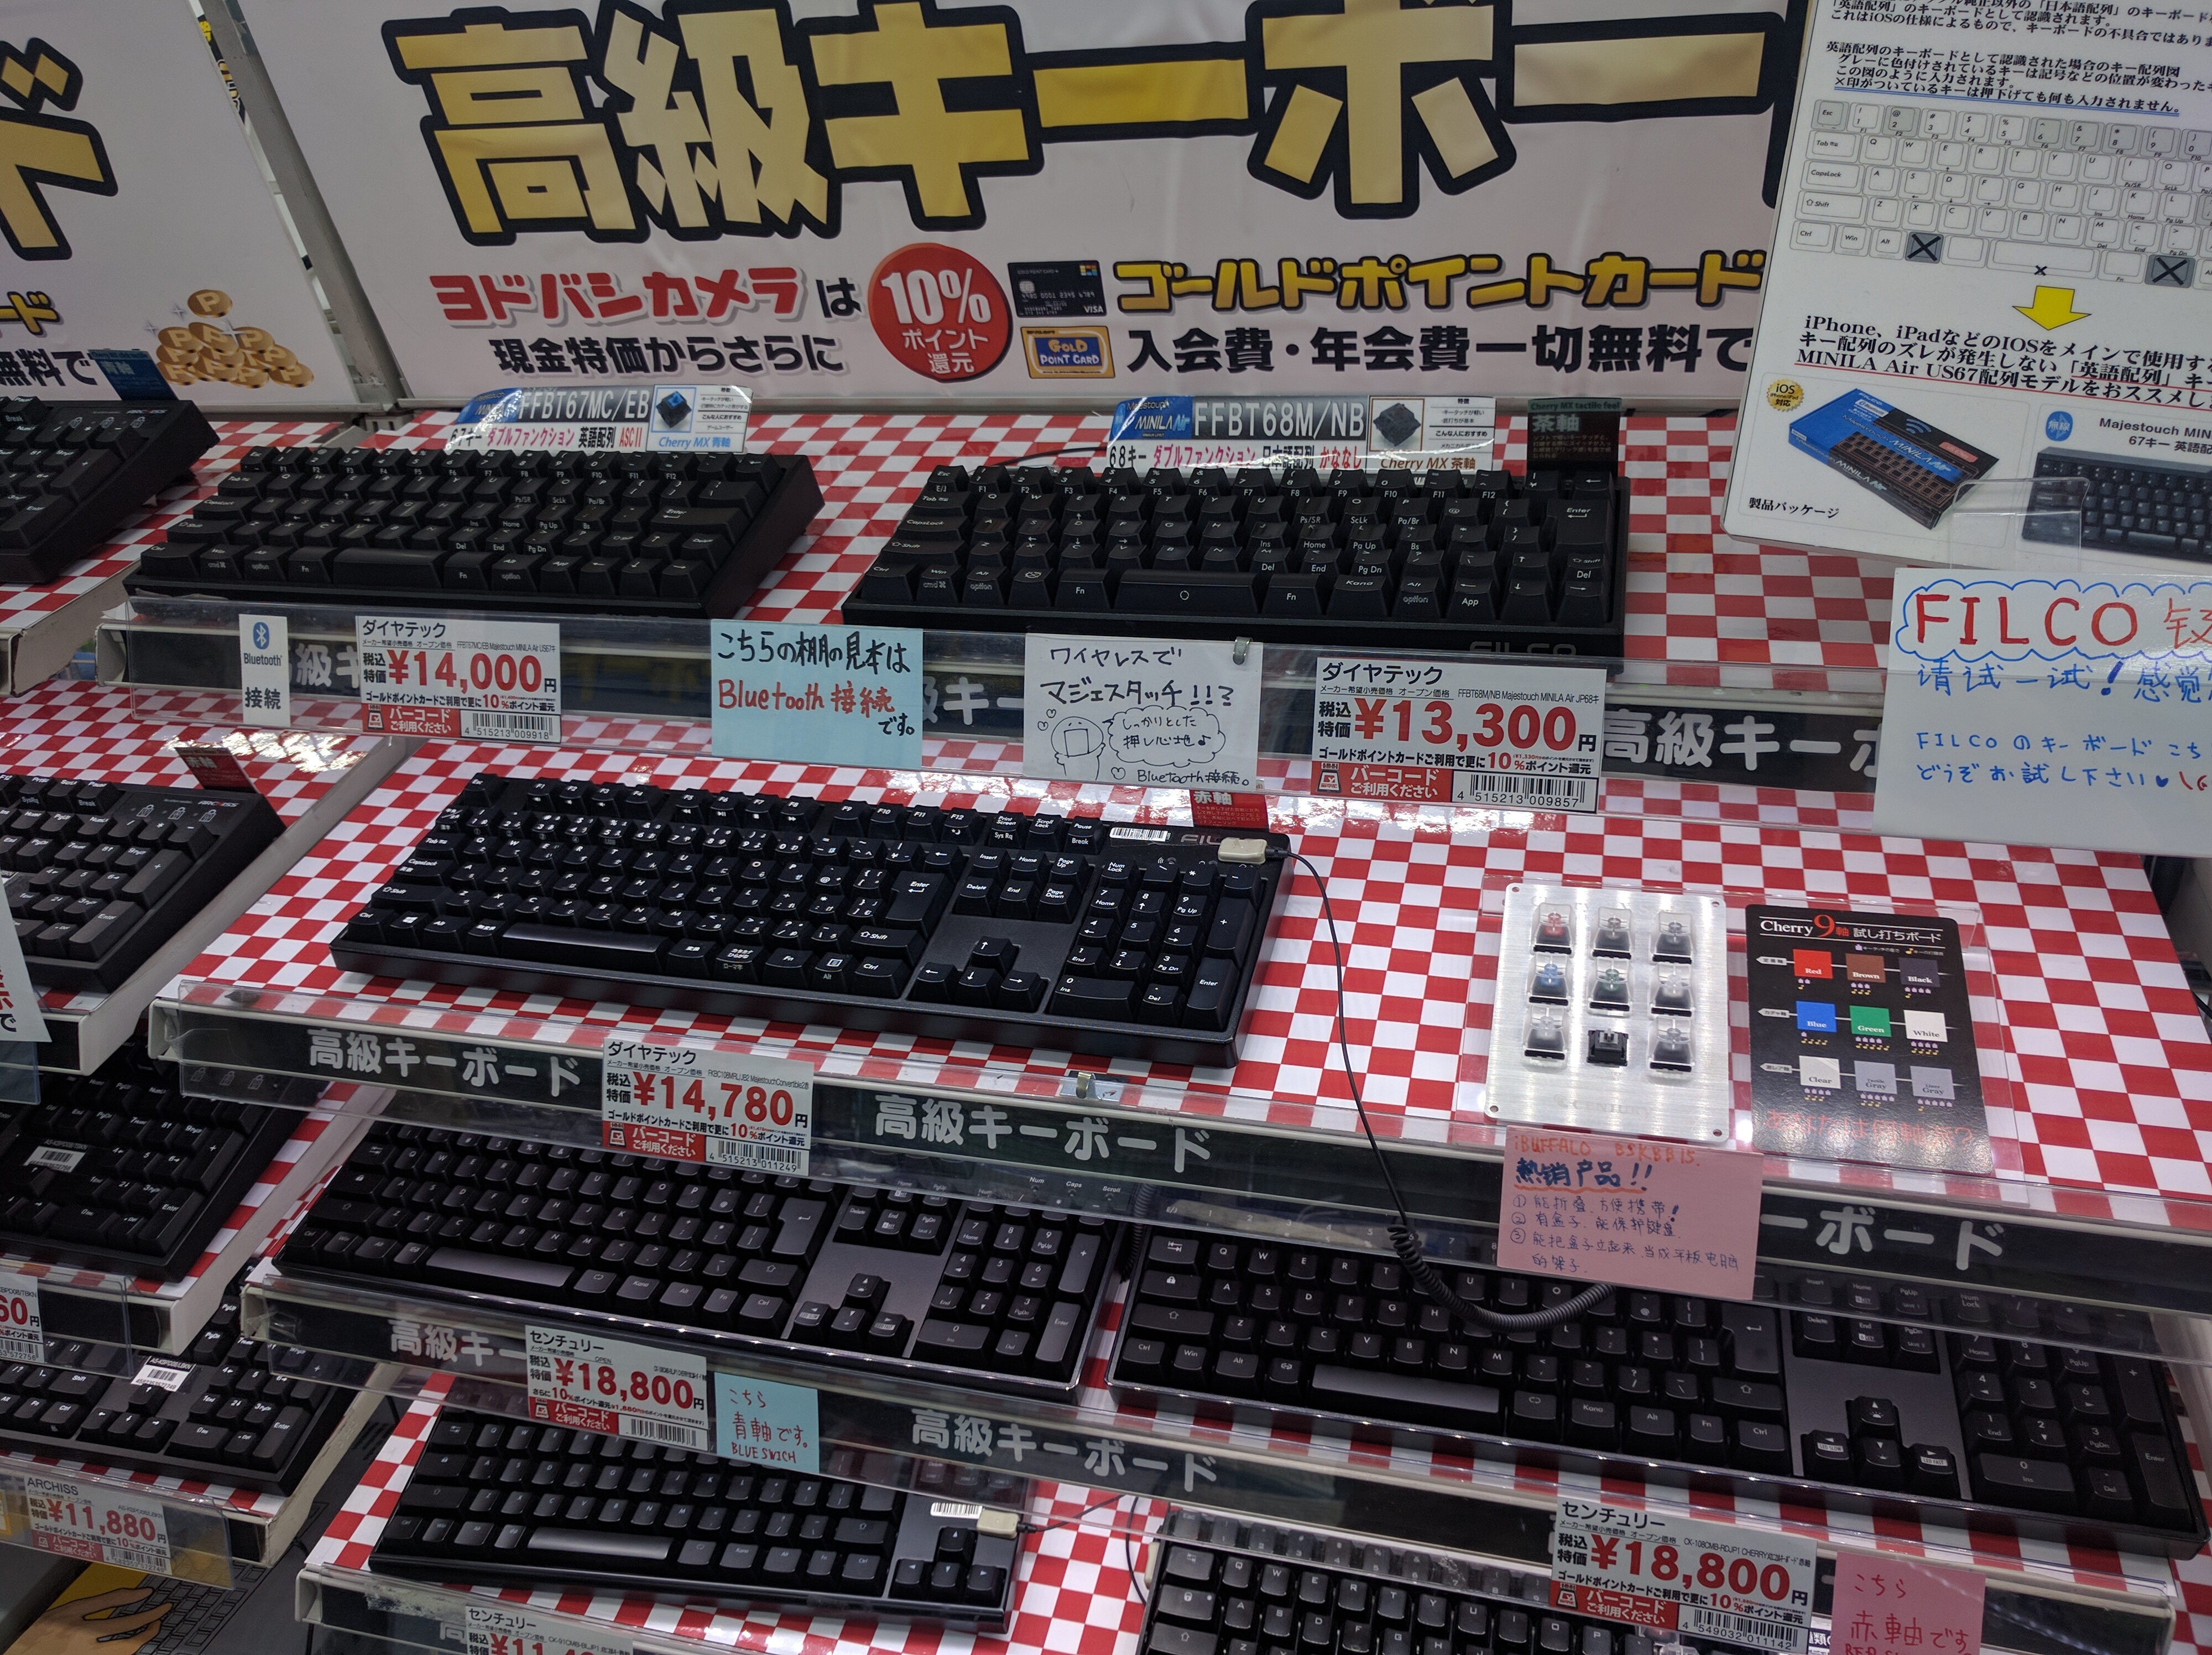 Specialized Keyboards